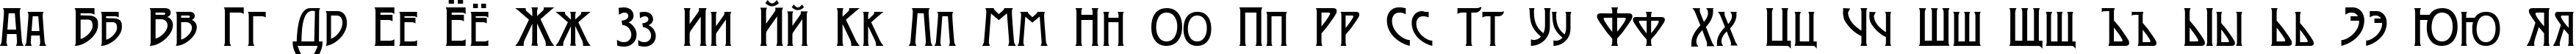 Пример написания русского алфавита шрифтом Moderno Two